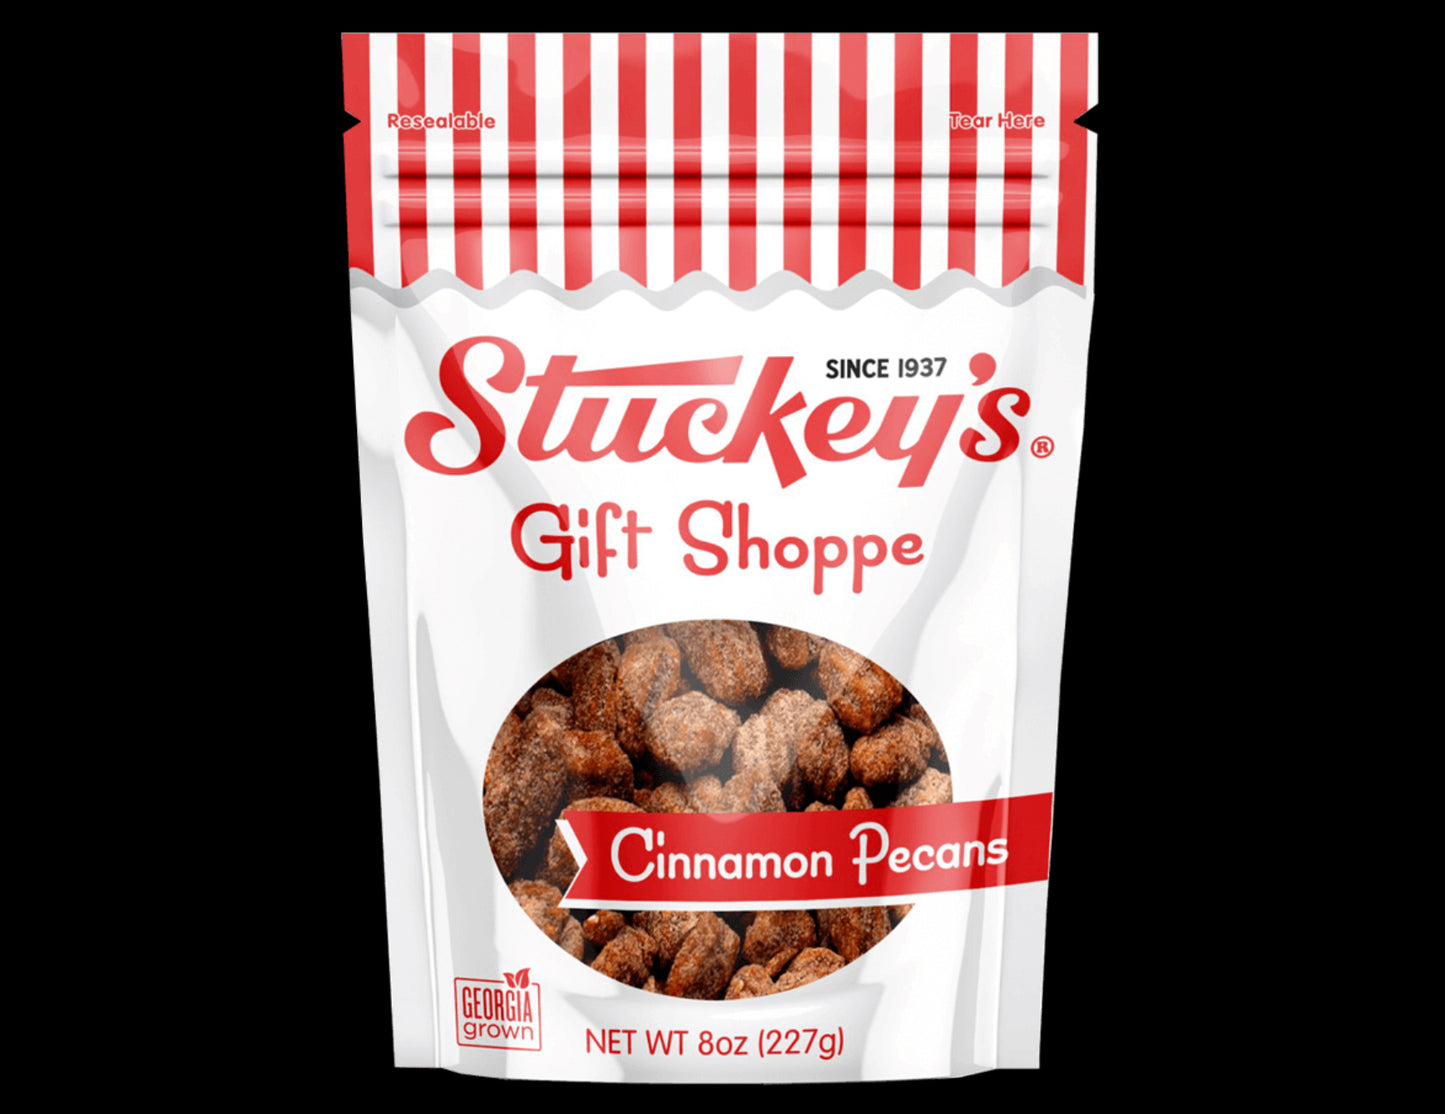 Stuckey’s cinnamon pecans